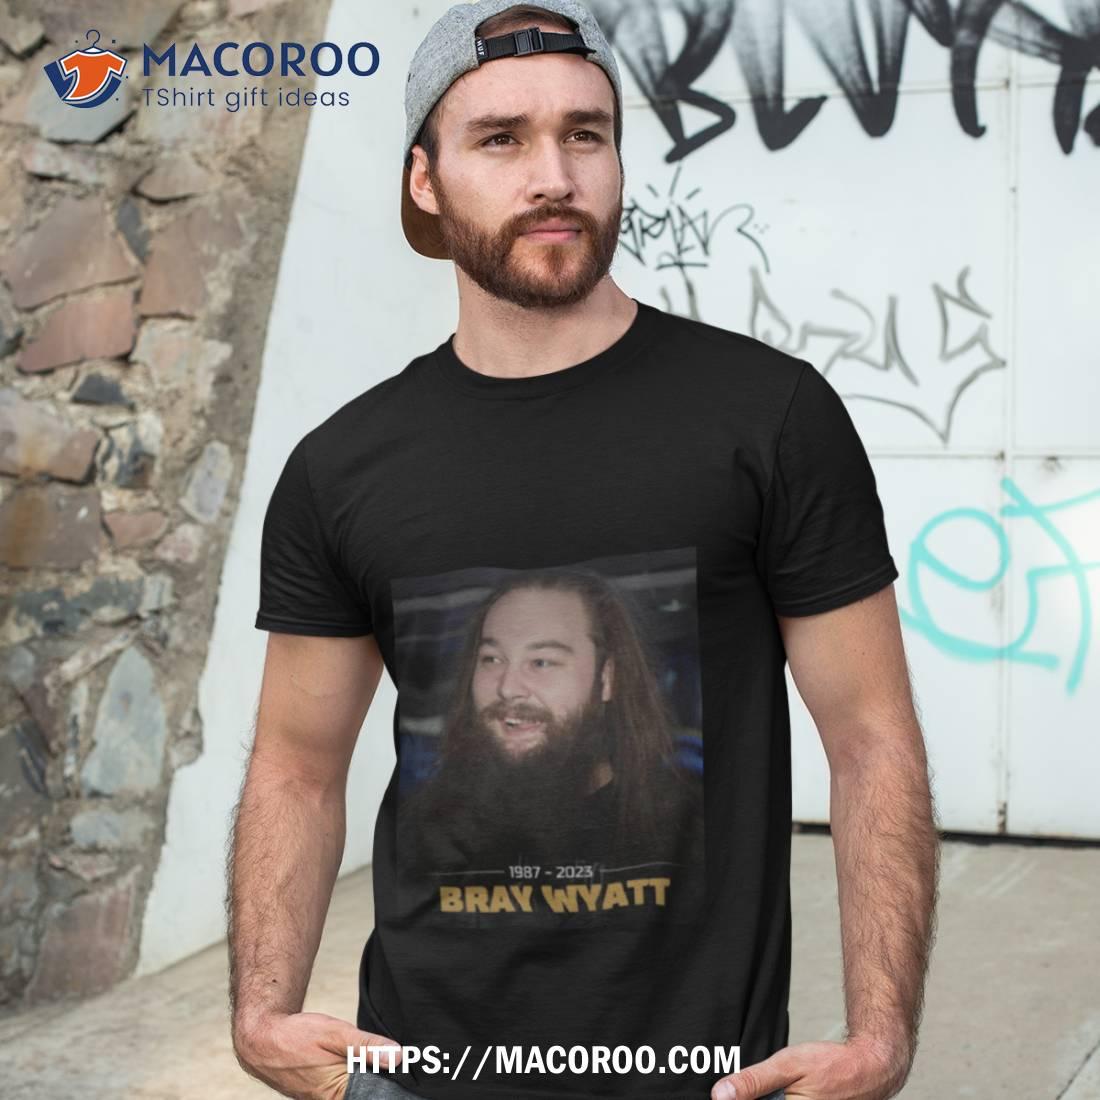 Rip Bray Wyatt 1987 2023 T-Shirt